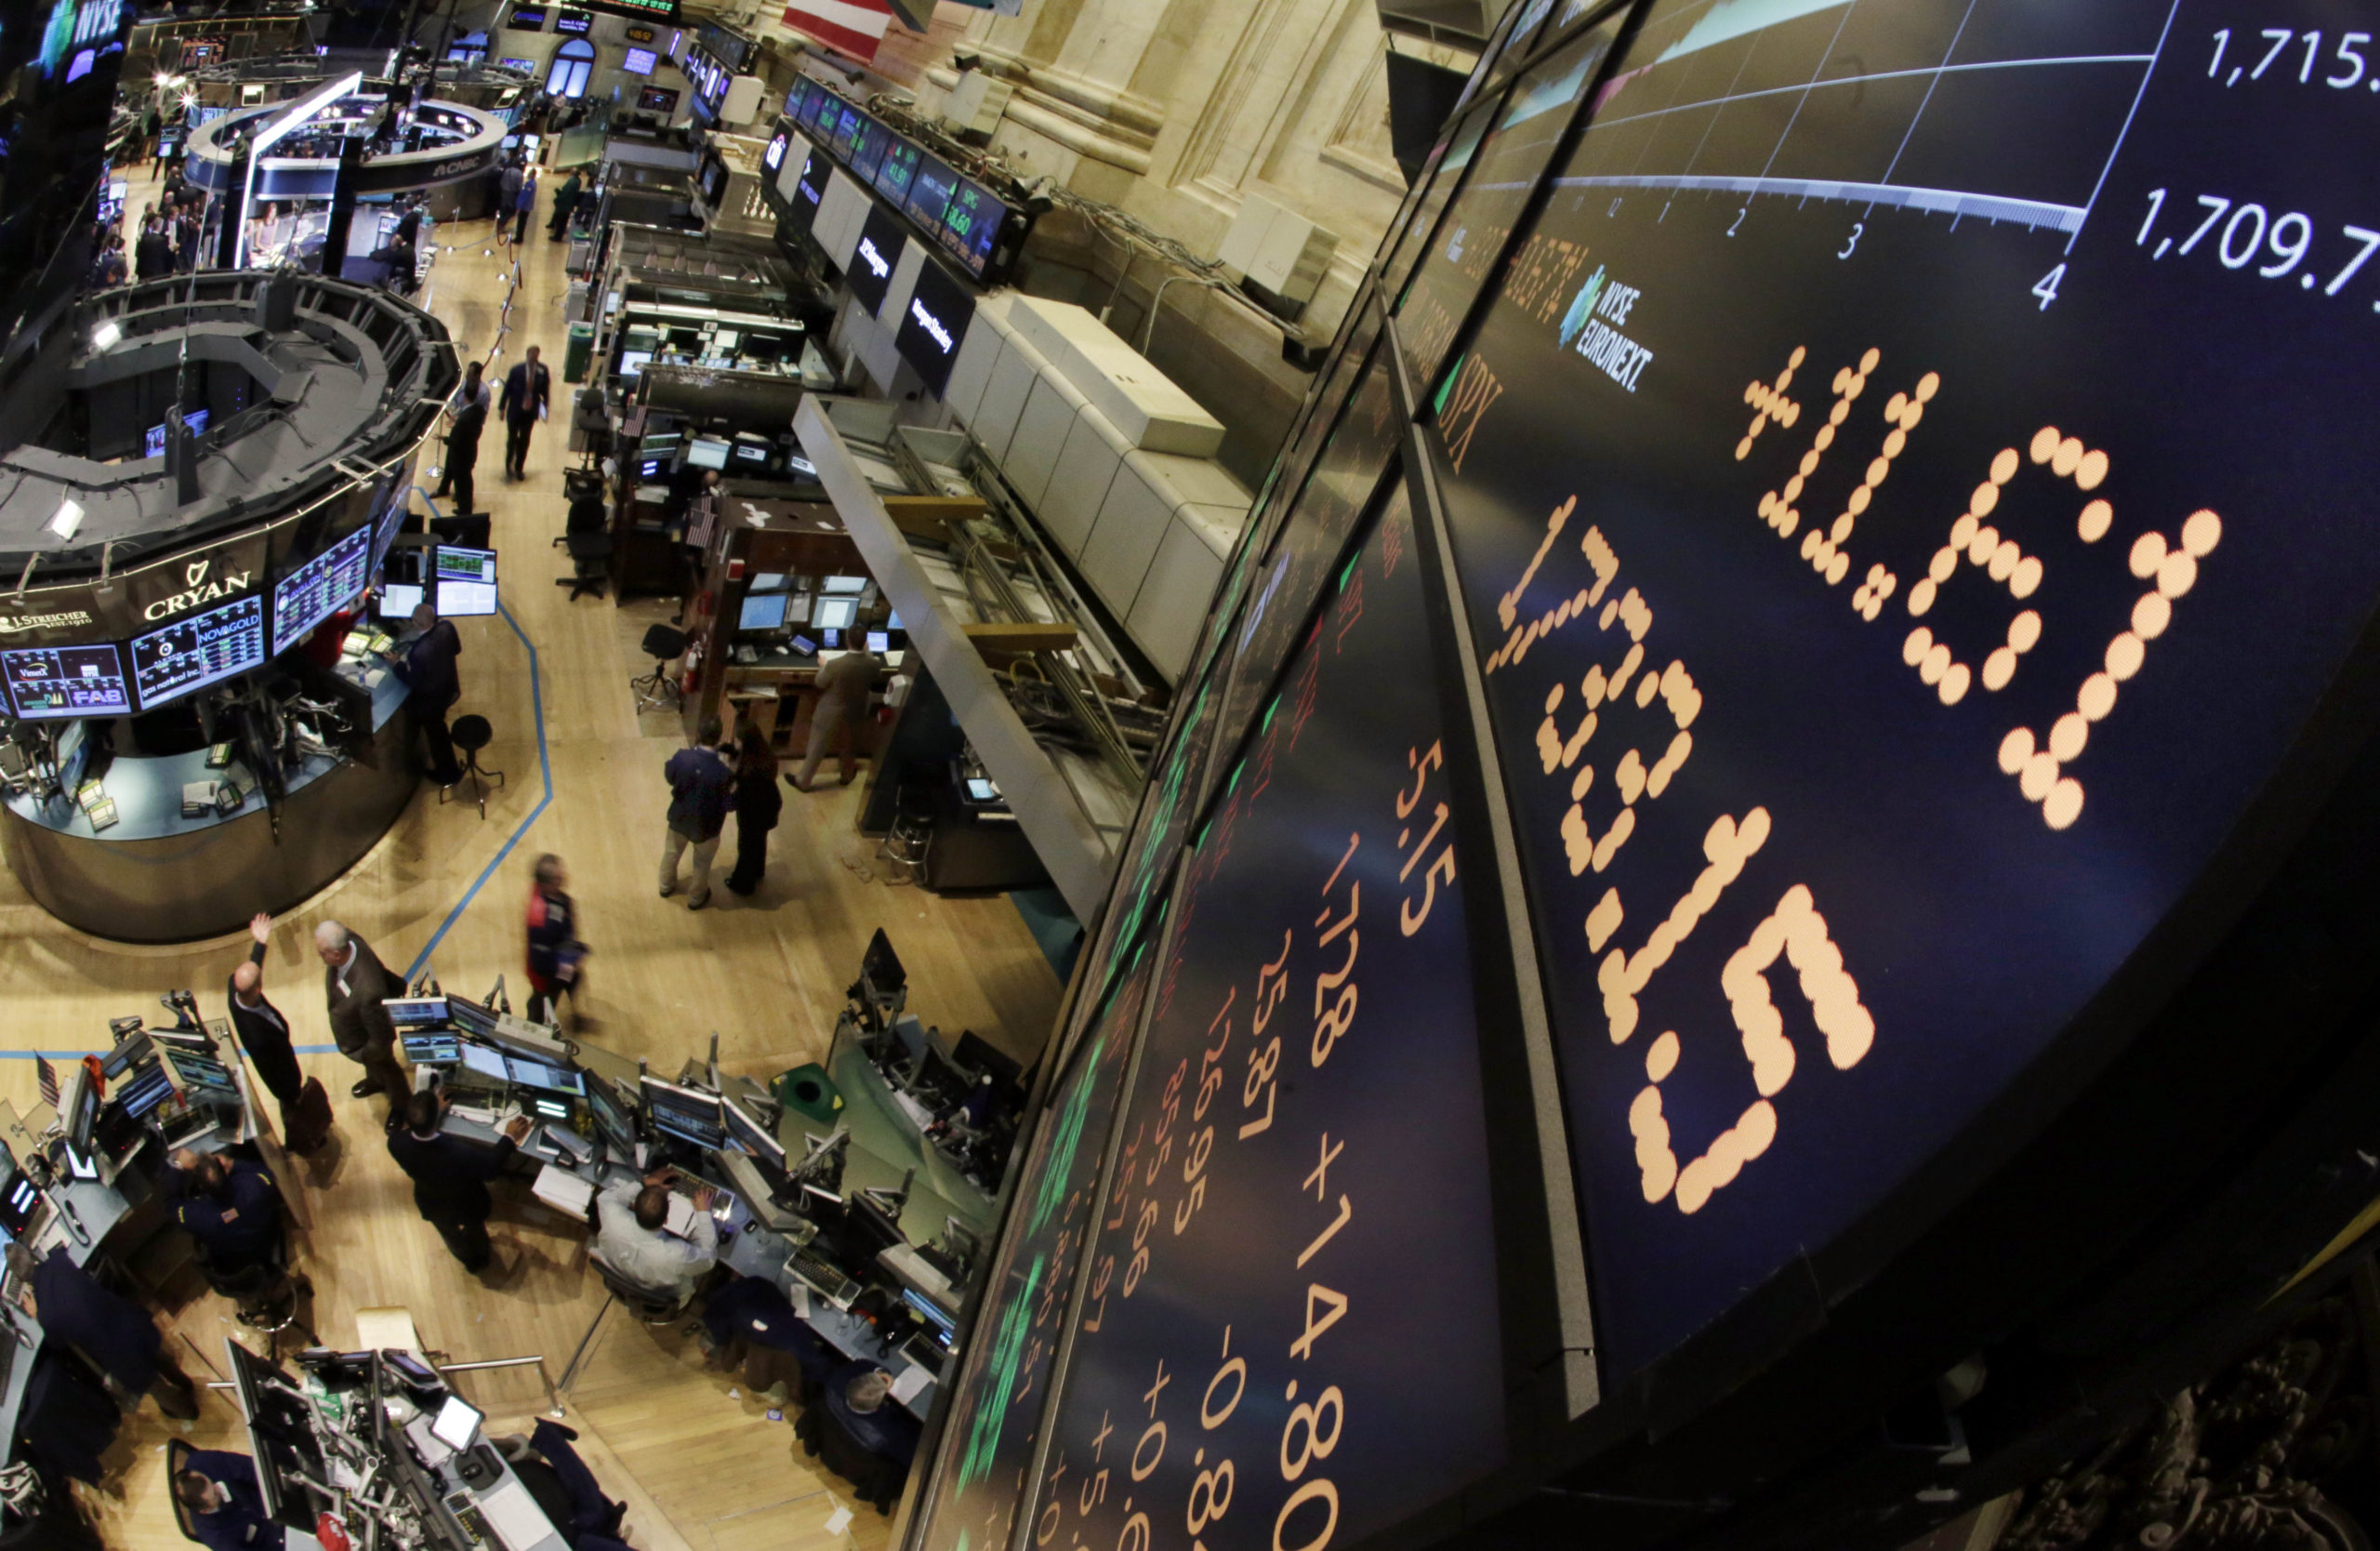 Wall Street: Έκλεισε με μικτό πρόσημο